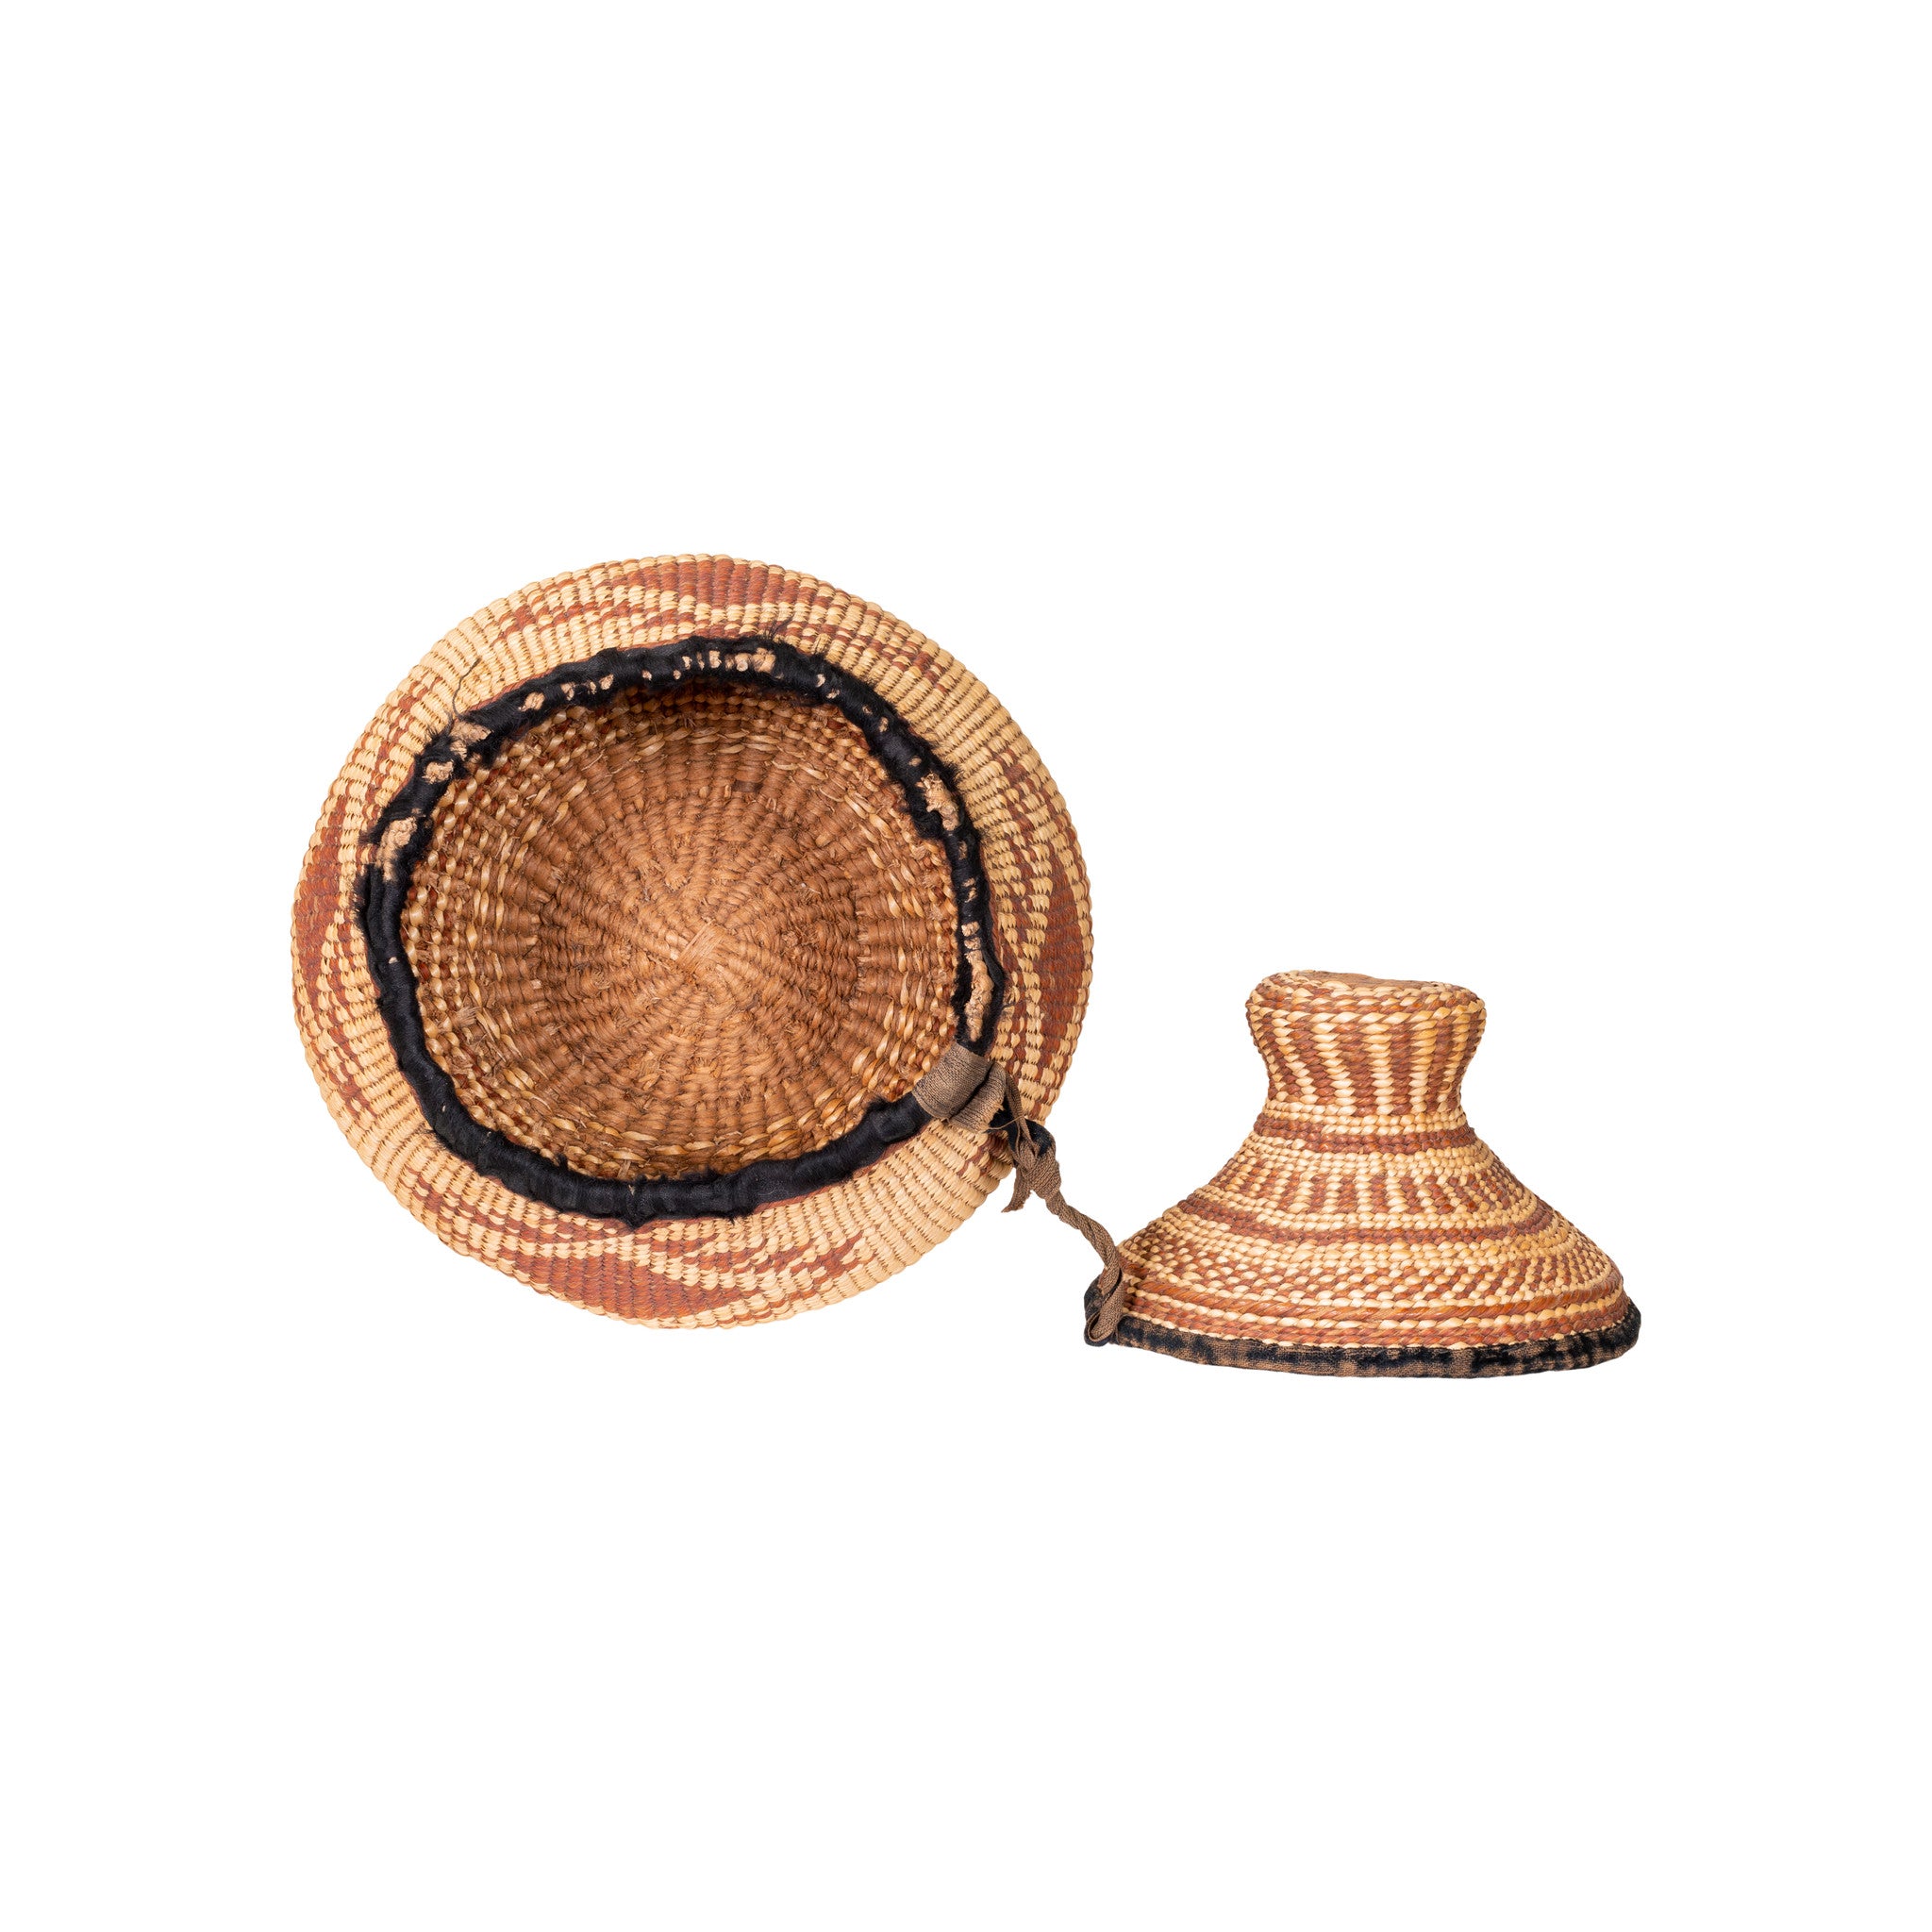 Hupa/Yurok Pedestal Treasure Basket